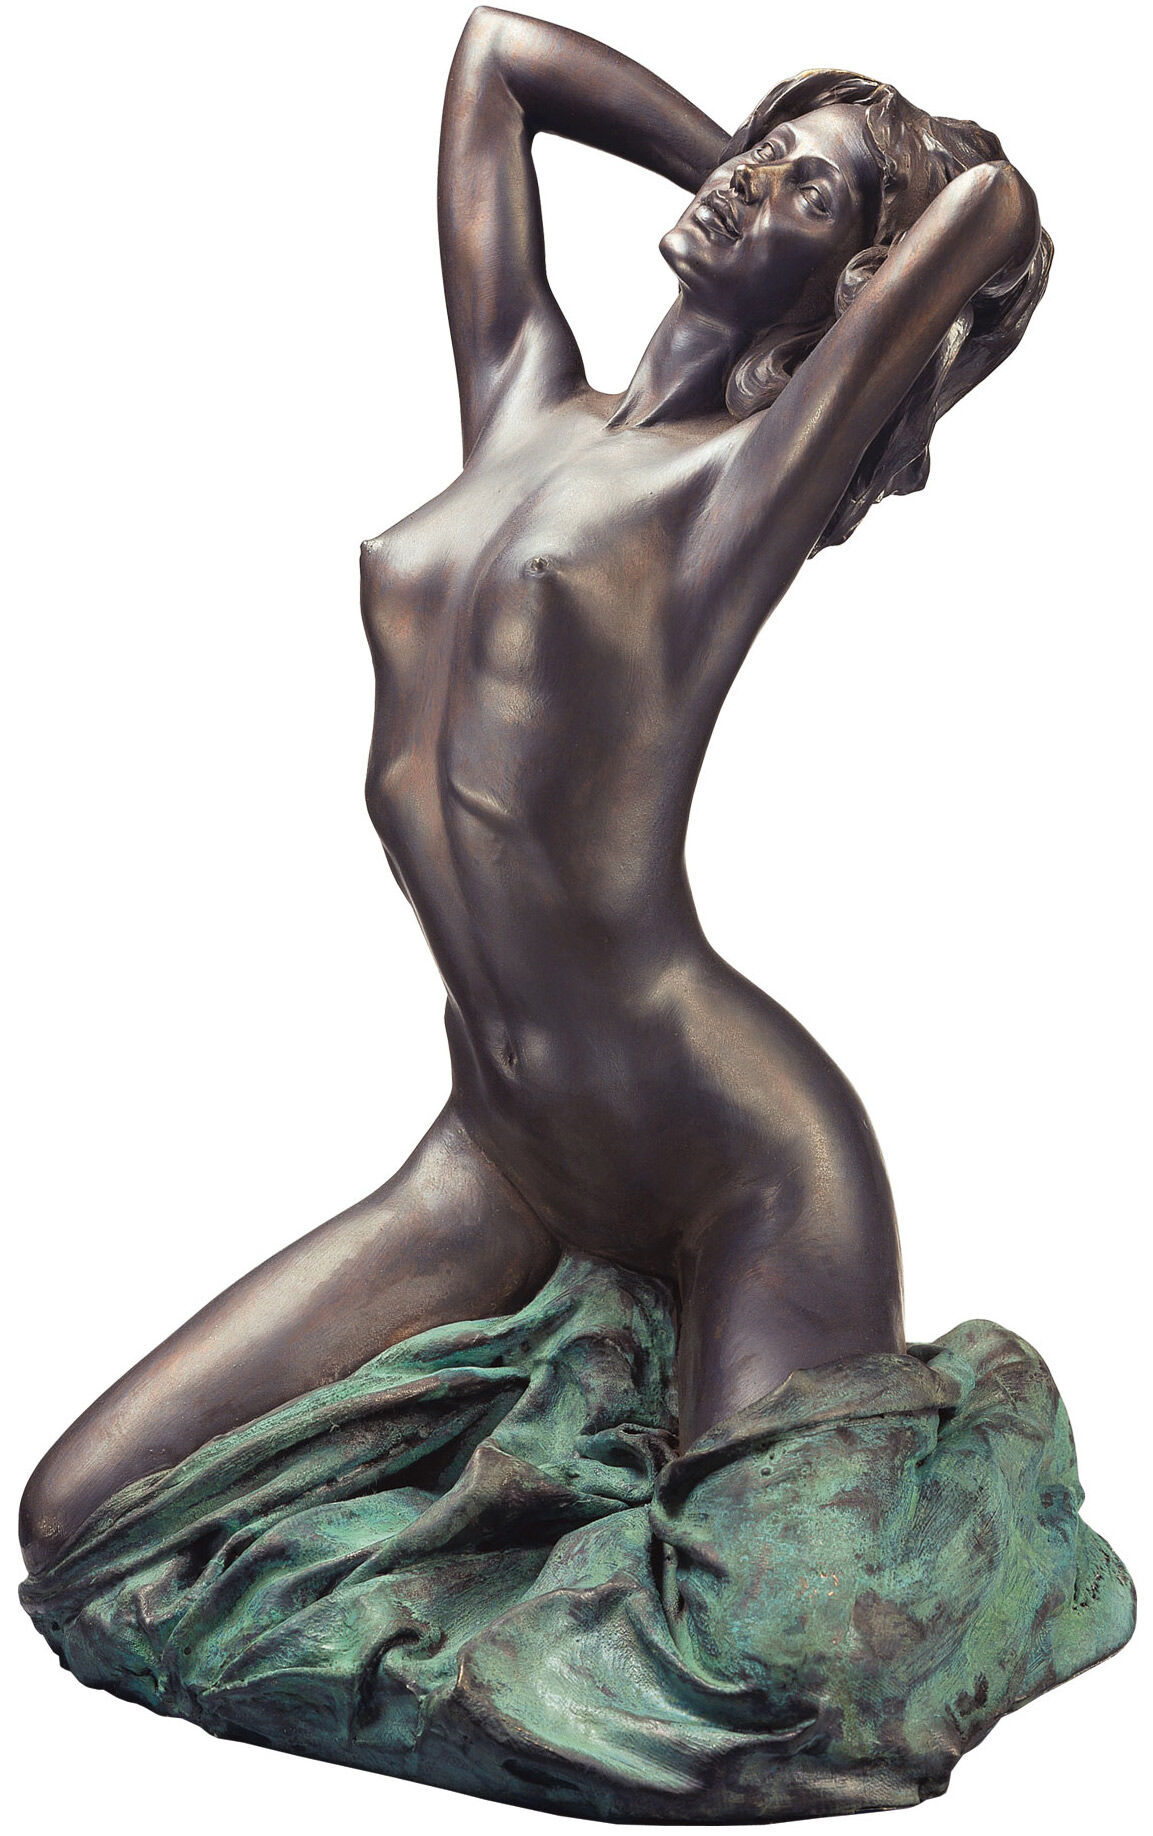 Skulptur "Nudo nuovo" (1992), Version in Kunstmarmor bronziert von Vittorio Luigi Tessaro